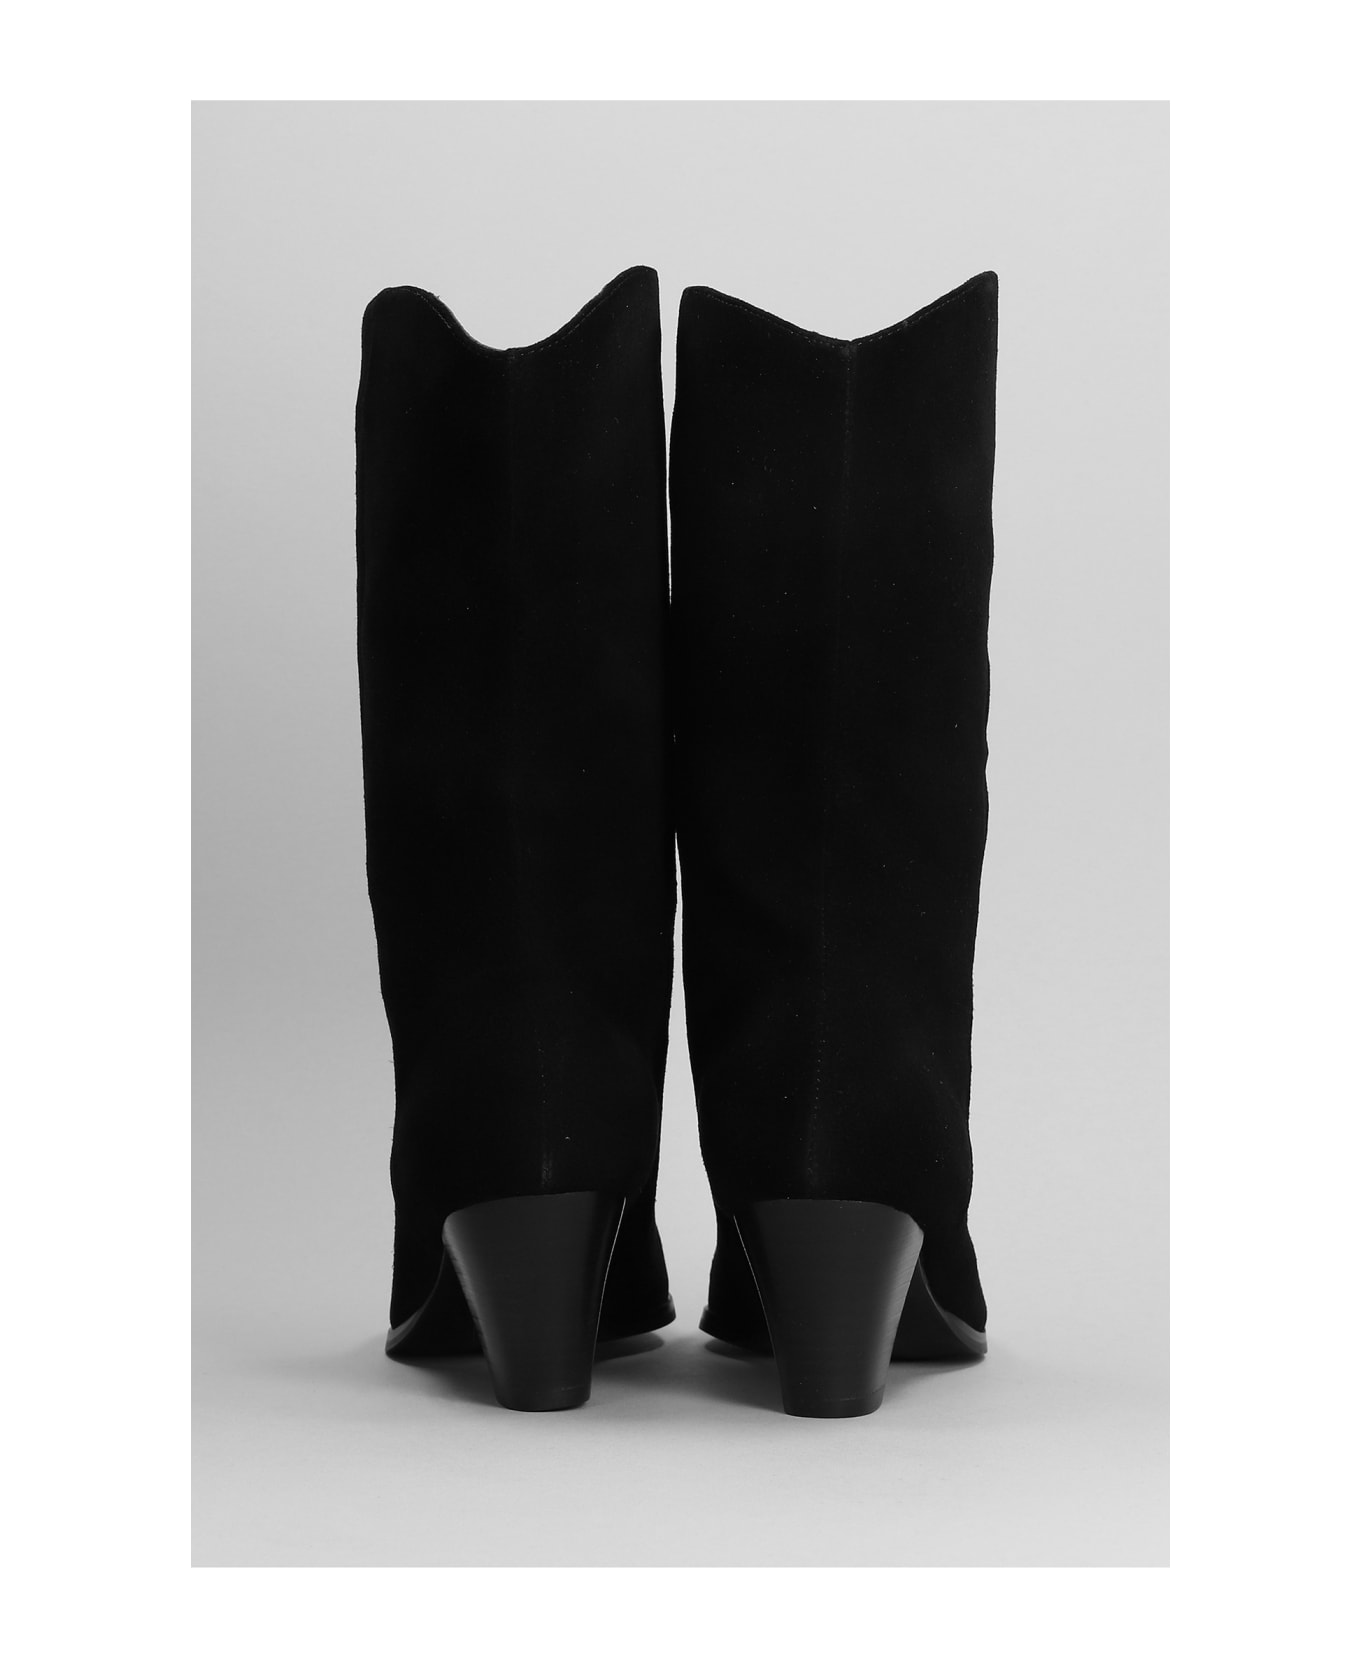 Bibi Lou Low Heels Boots In Black Suede - black